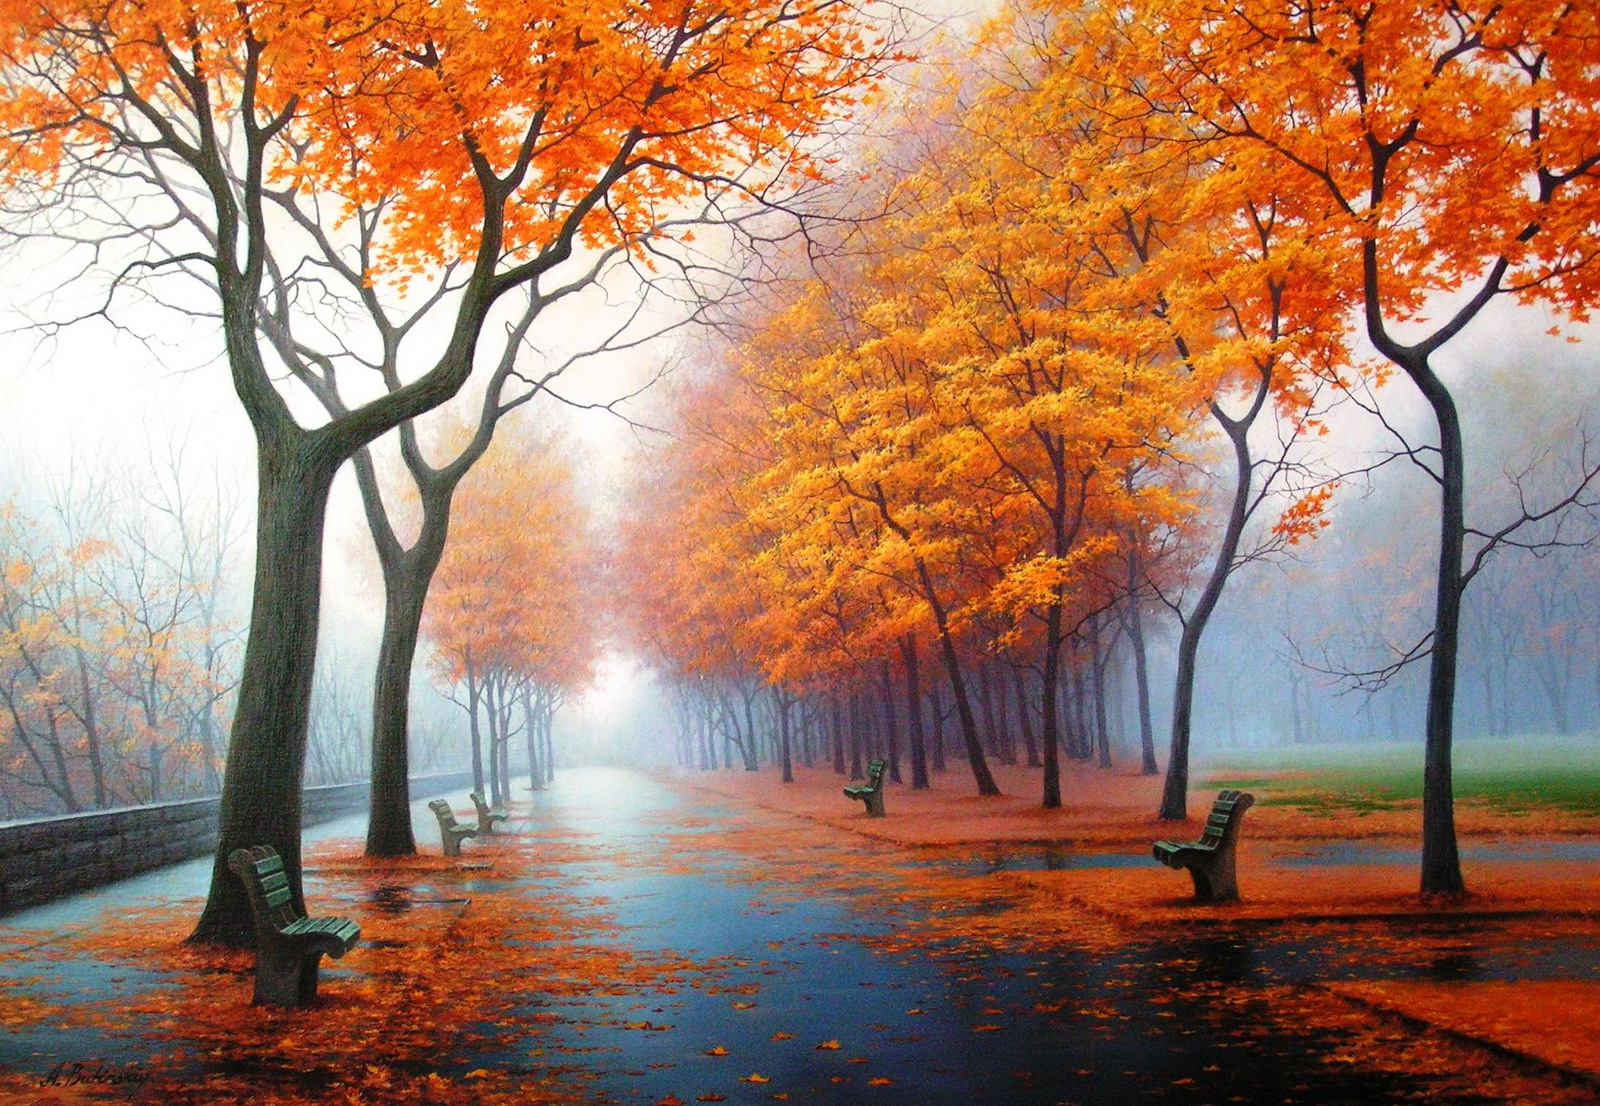 Fall Season Wallpaper Image Desktop Image